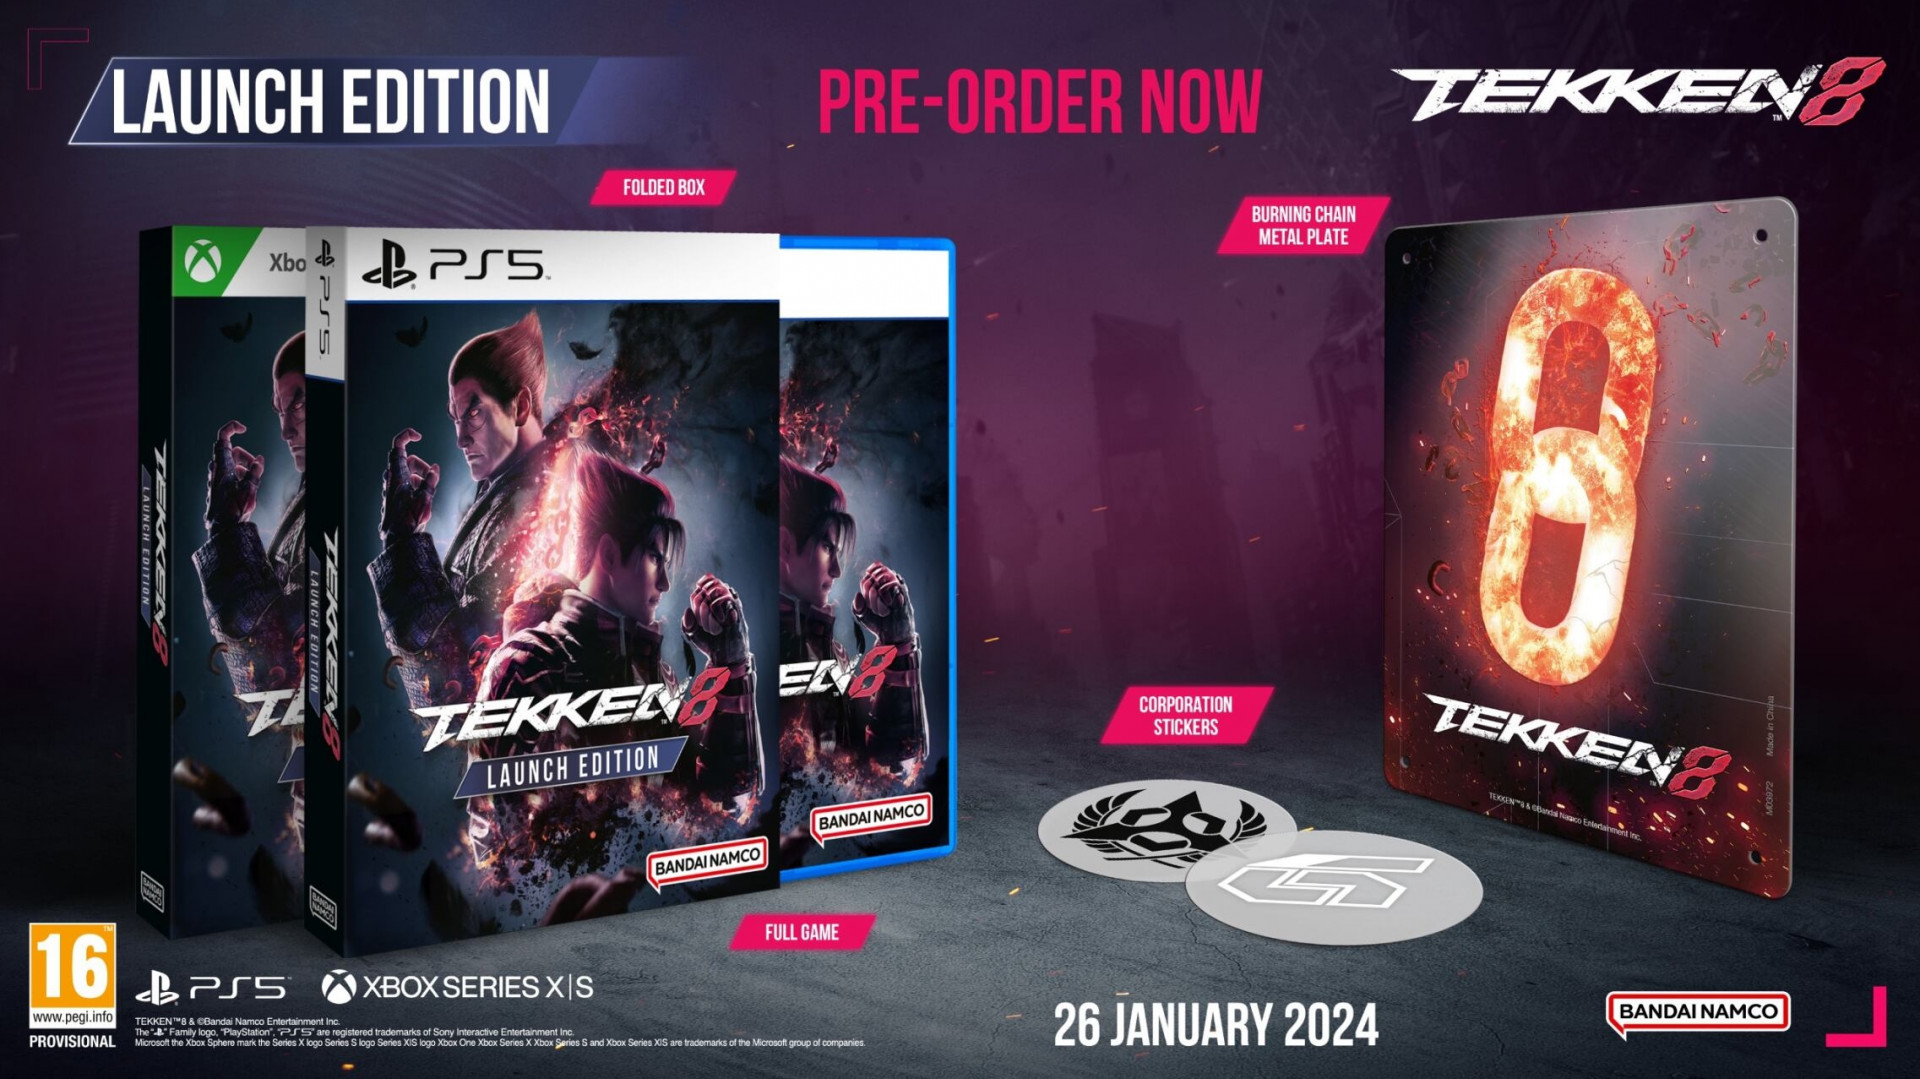 Tekken 8 Launch Edition